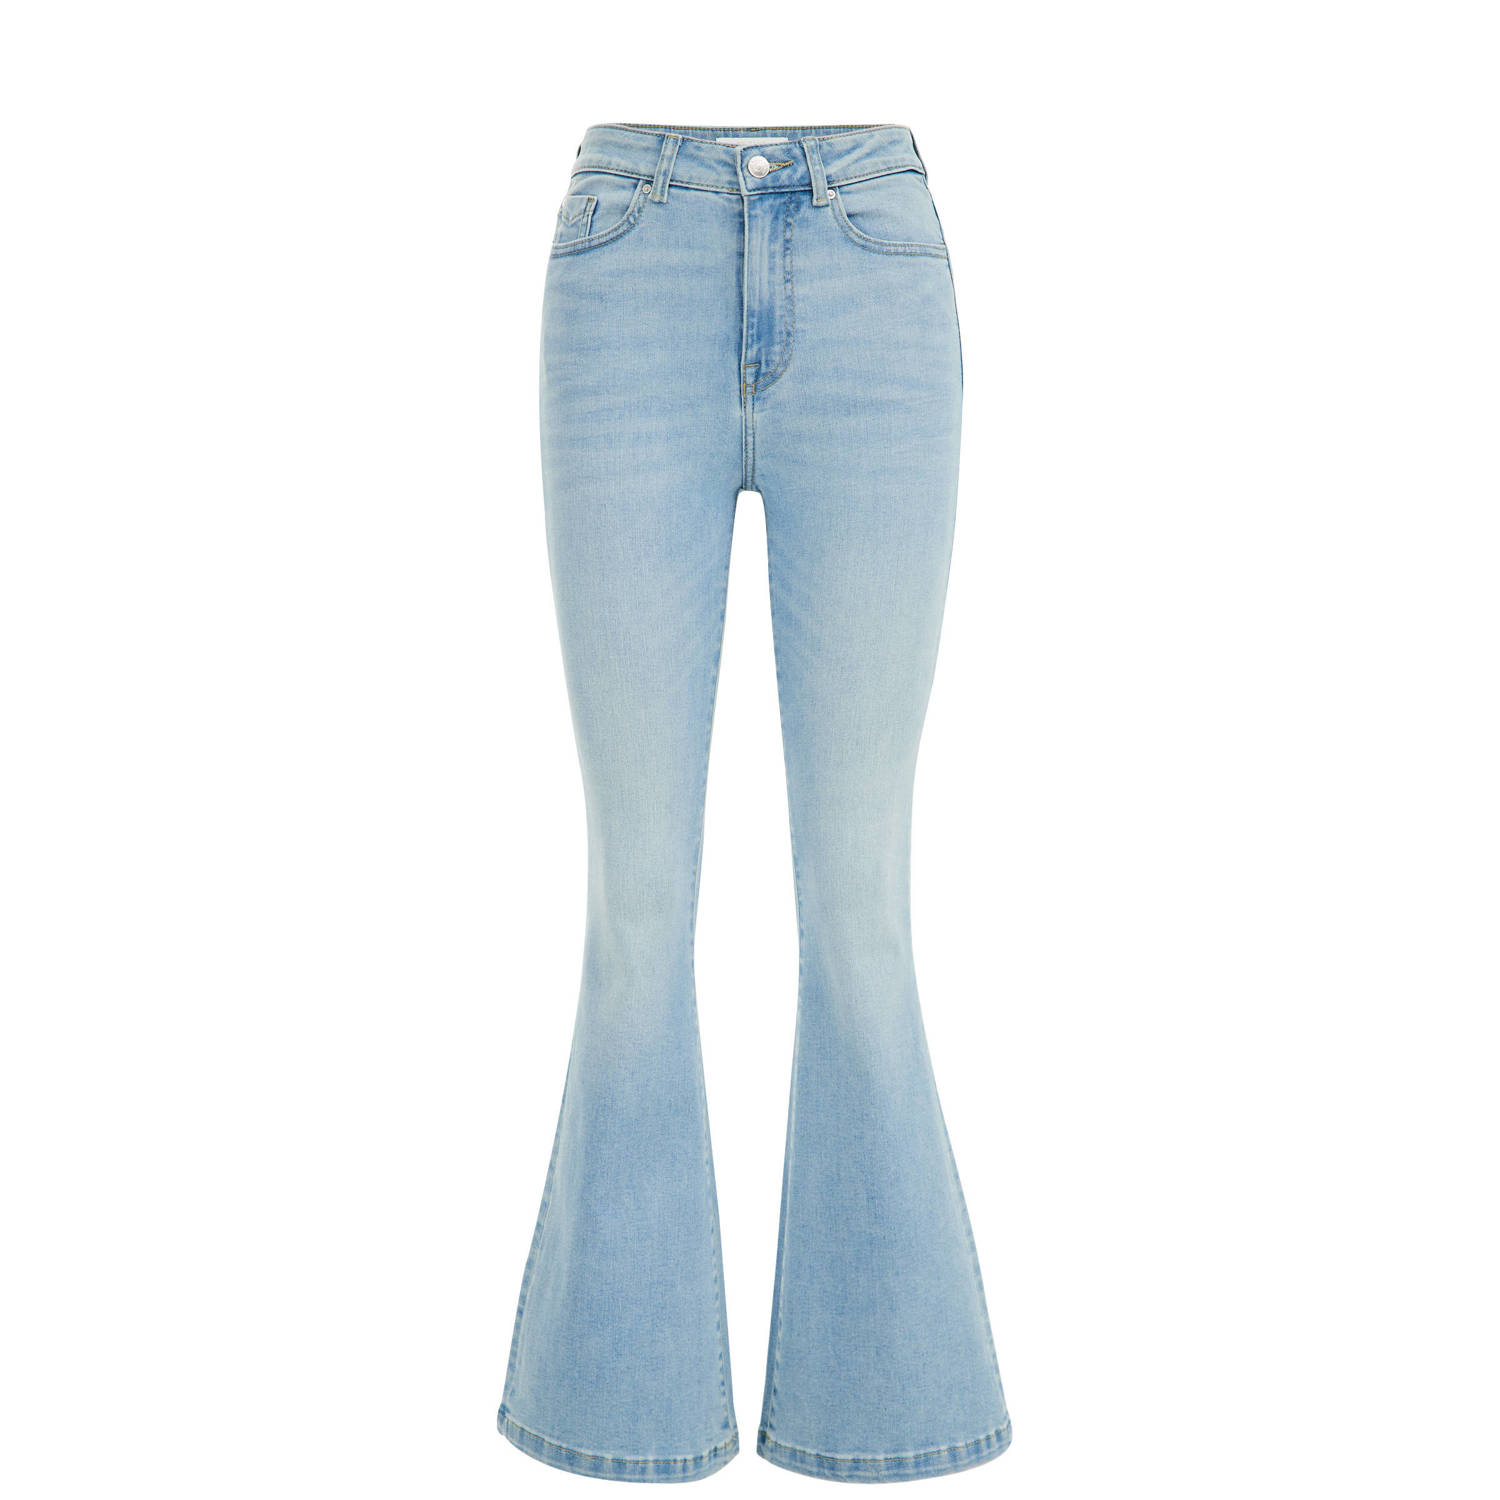 WE Fashion flared jeans light blue denim